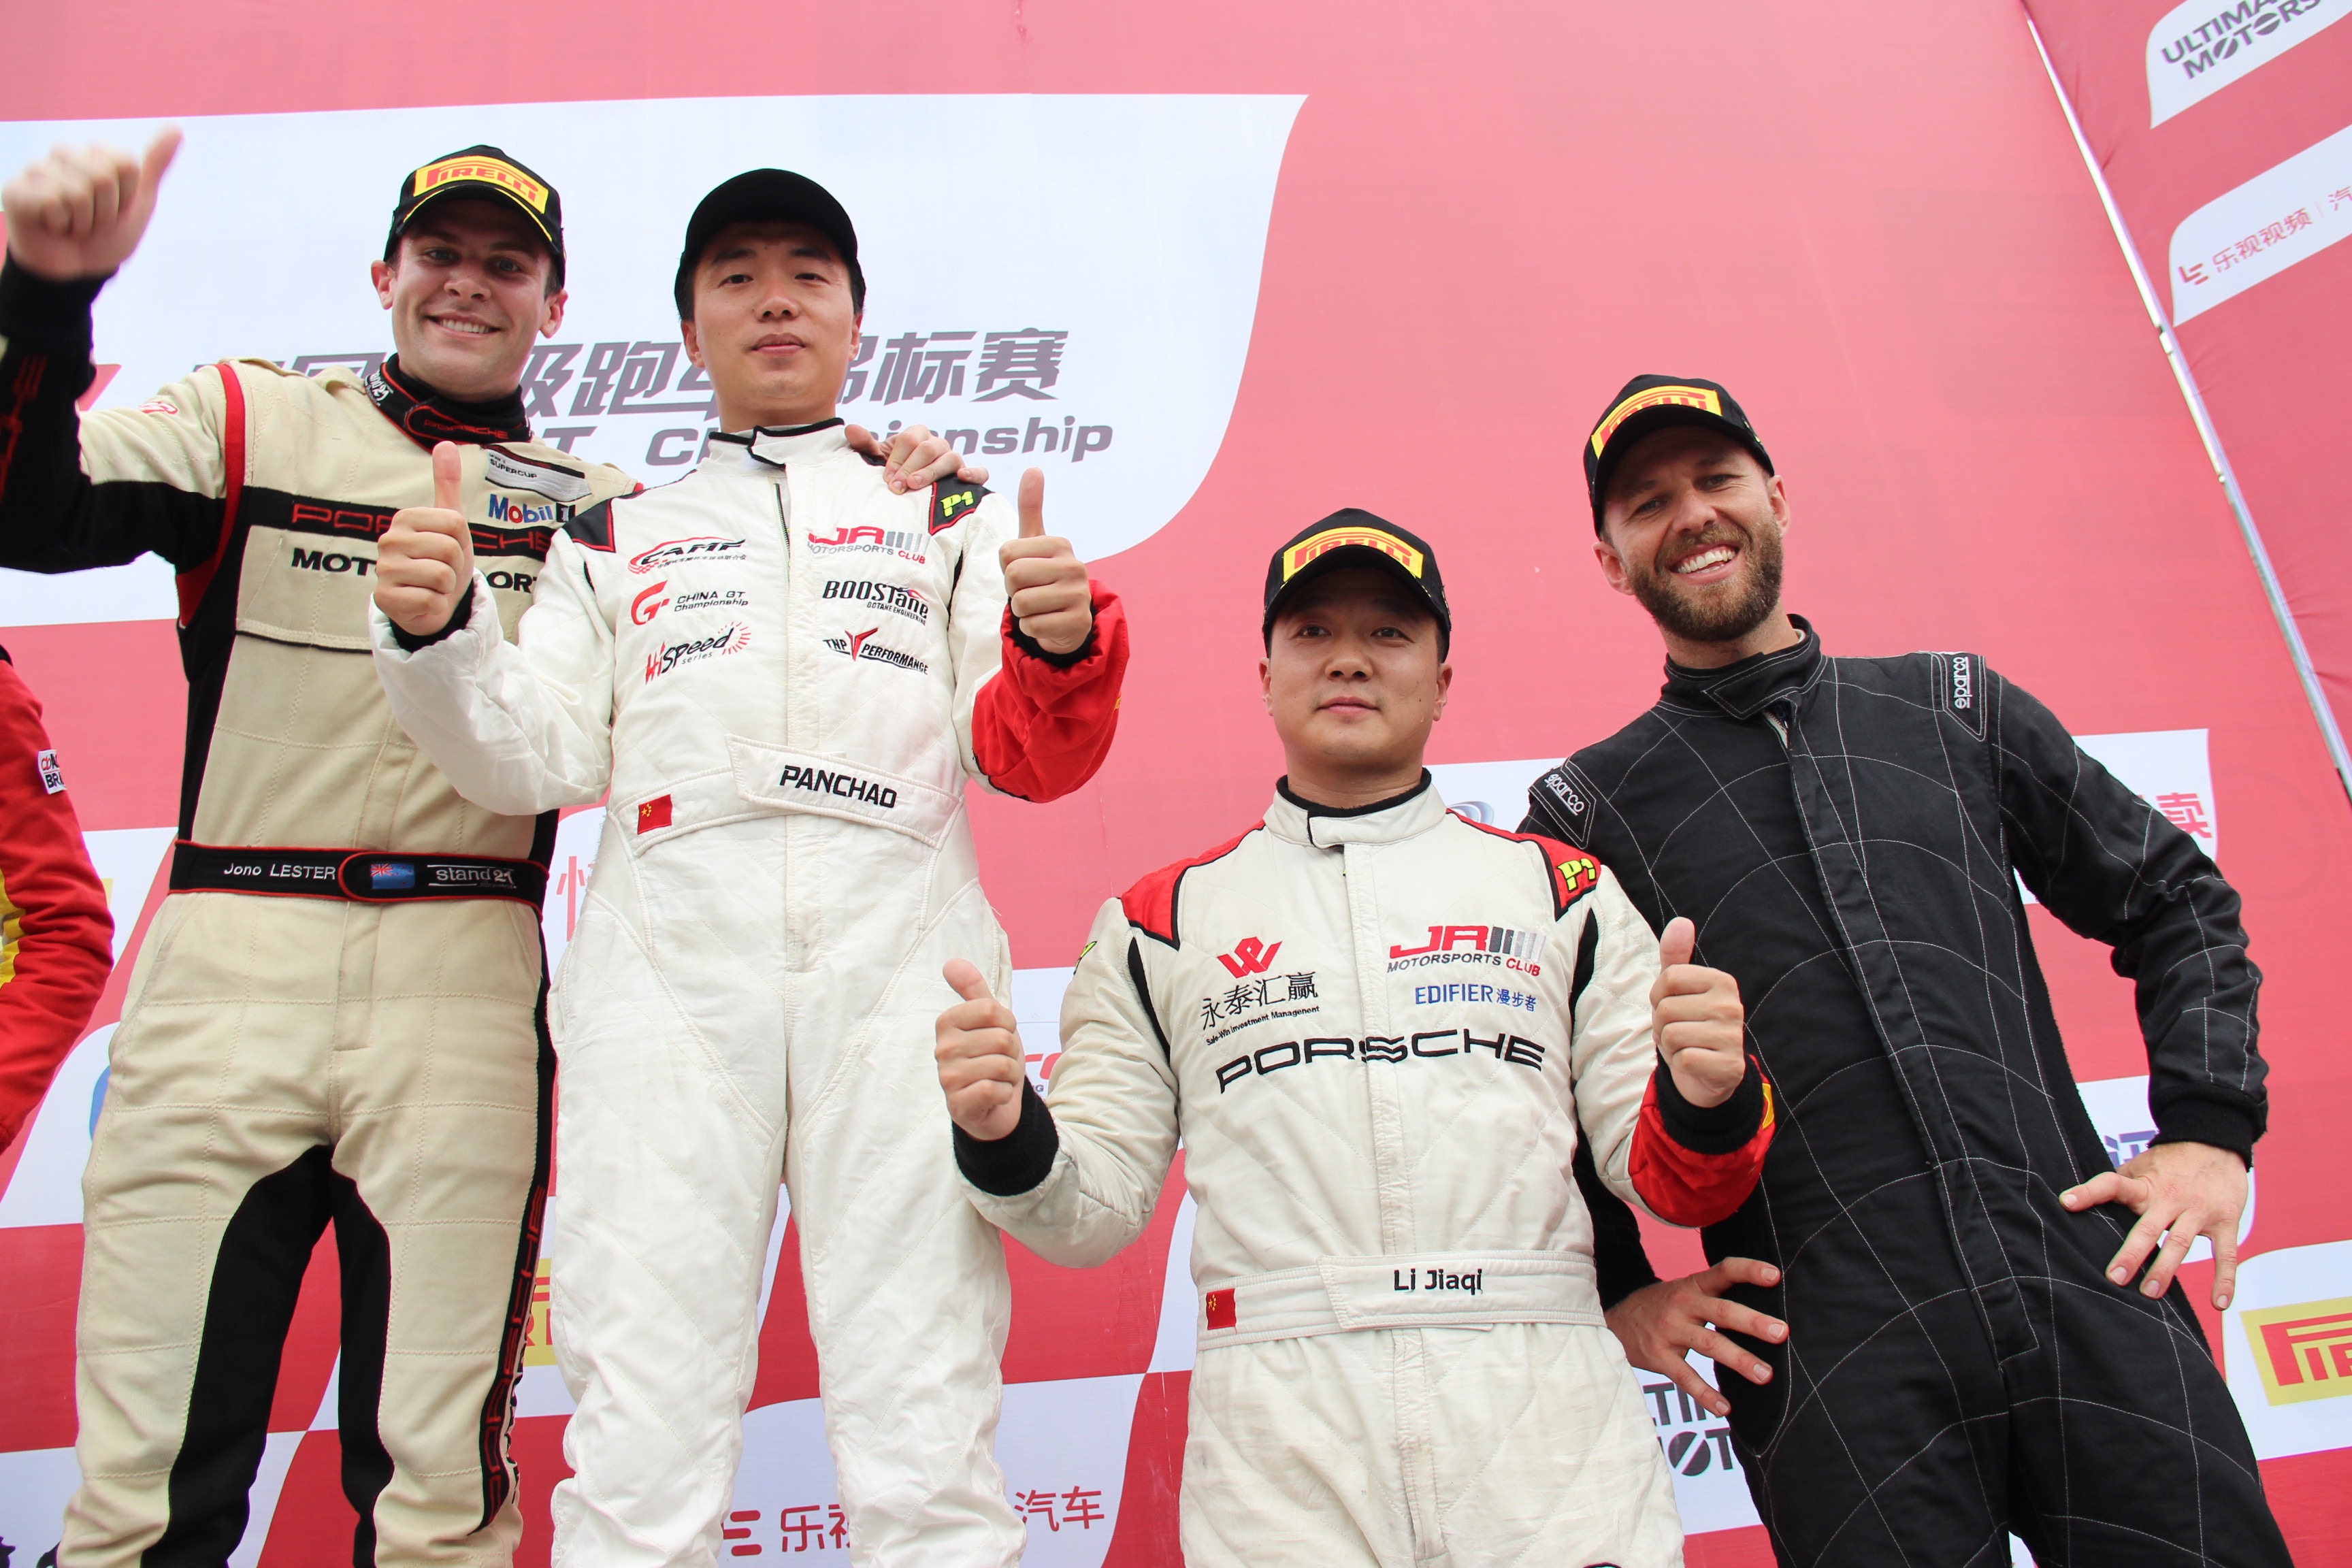 Jono Lester wins on China GT debut at Chengdu